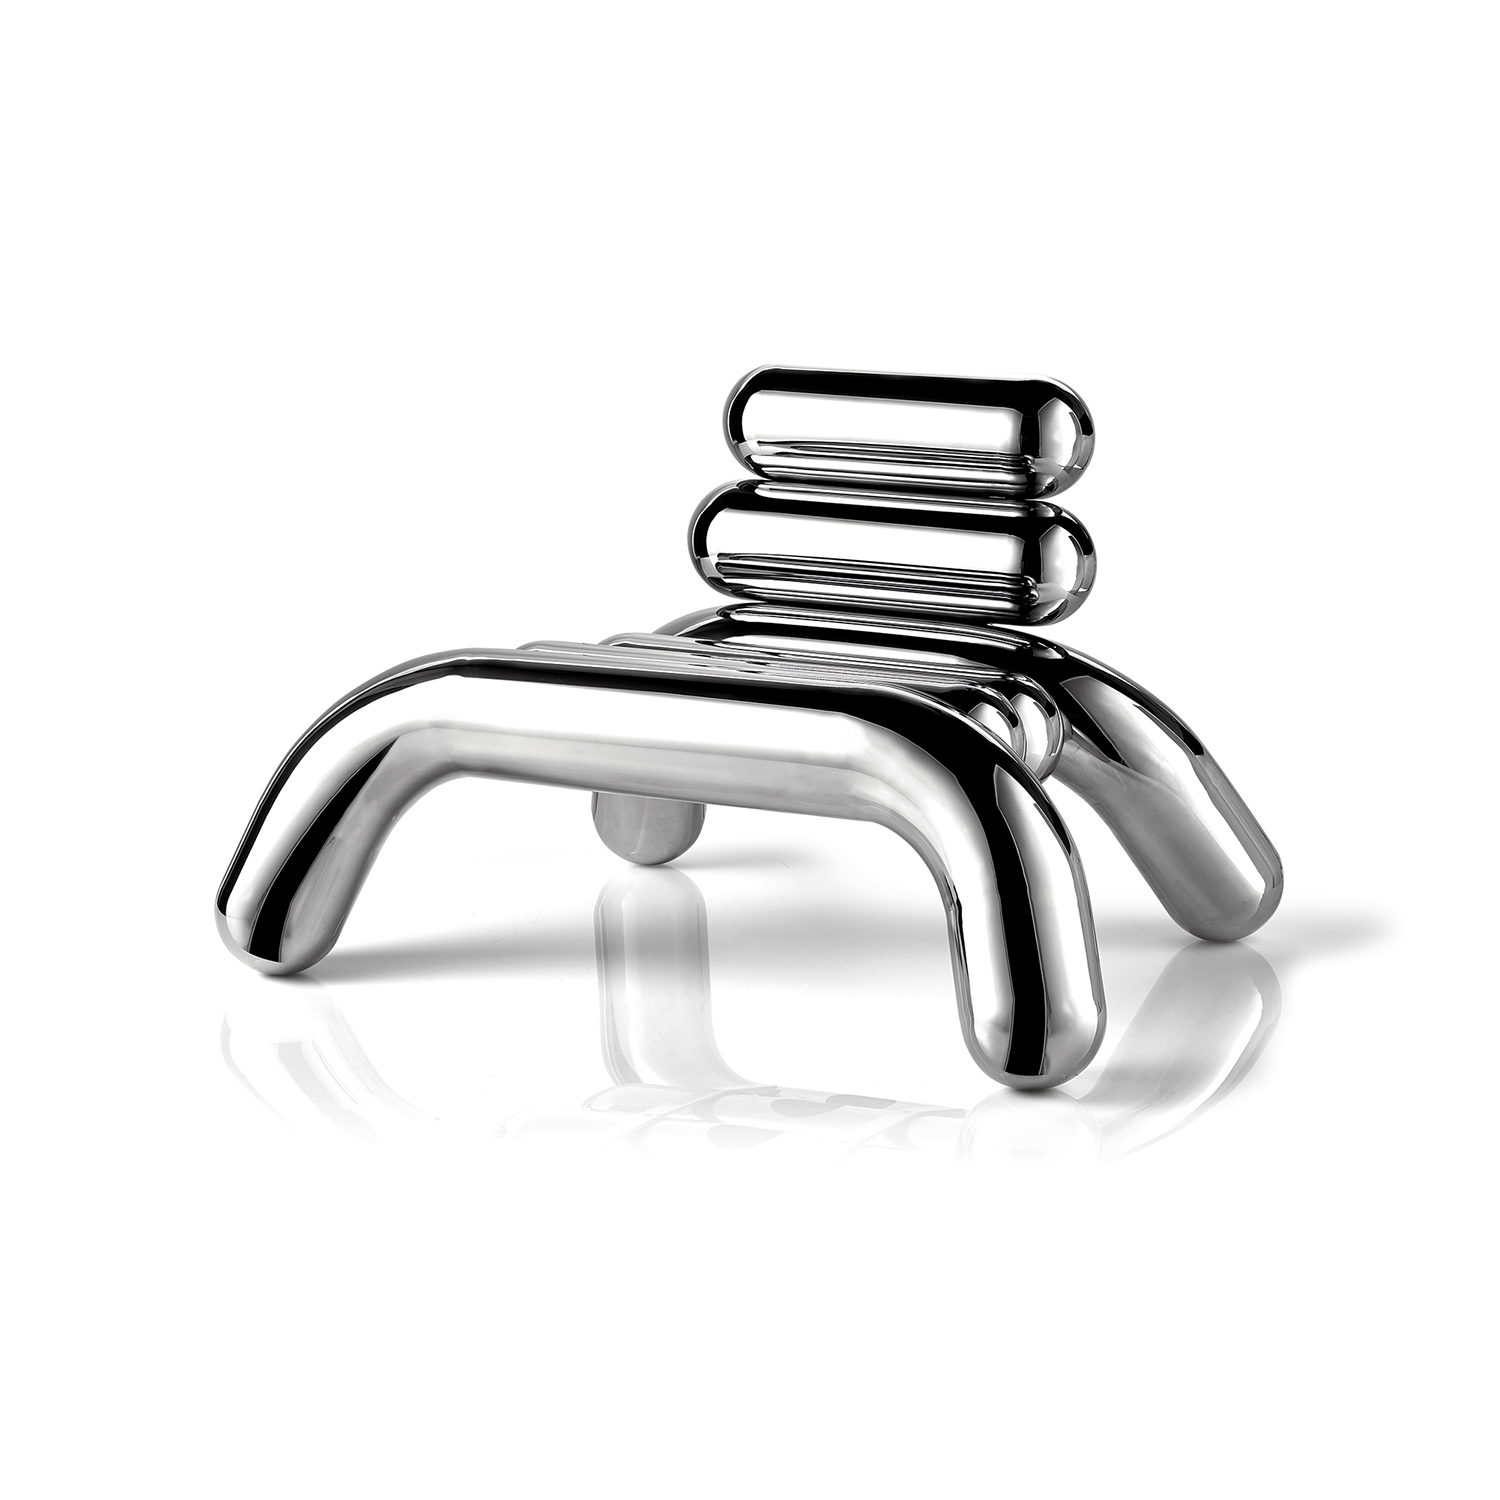 Bibendum-1-chair-1-Limited-Edition-by-Toni-Grilo